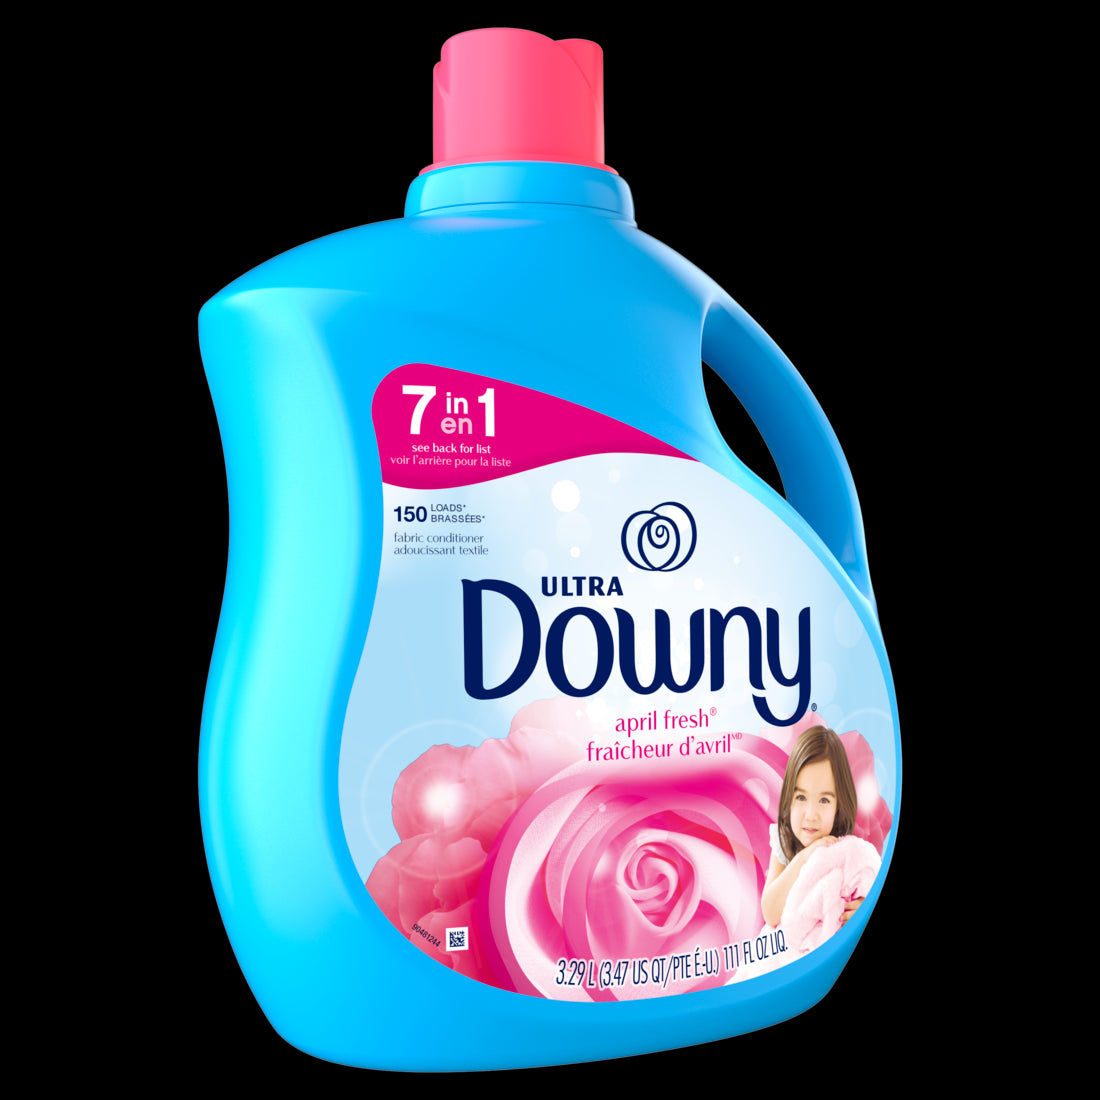 Downy Ultra Laundry Liquid Fabric Softener April Fresh- 111oz/150Loads/4pk